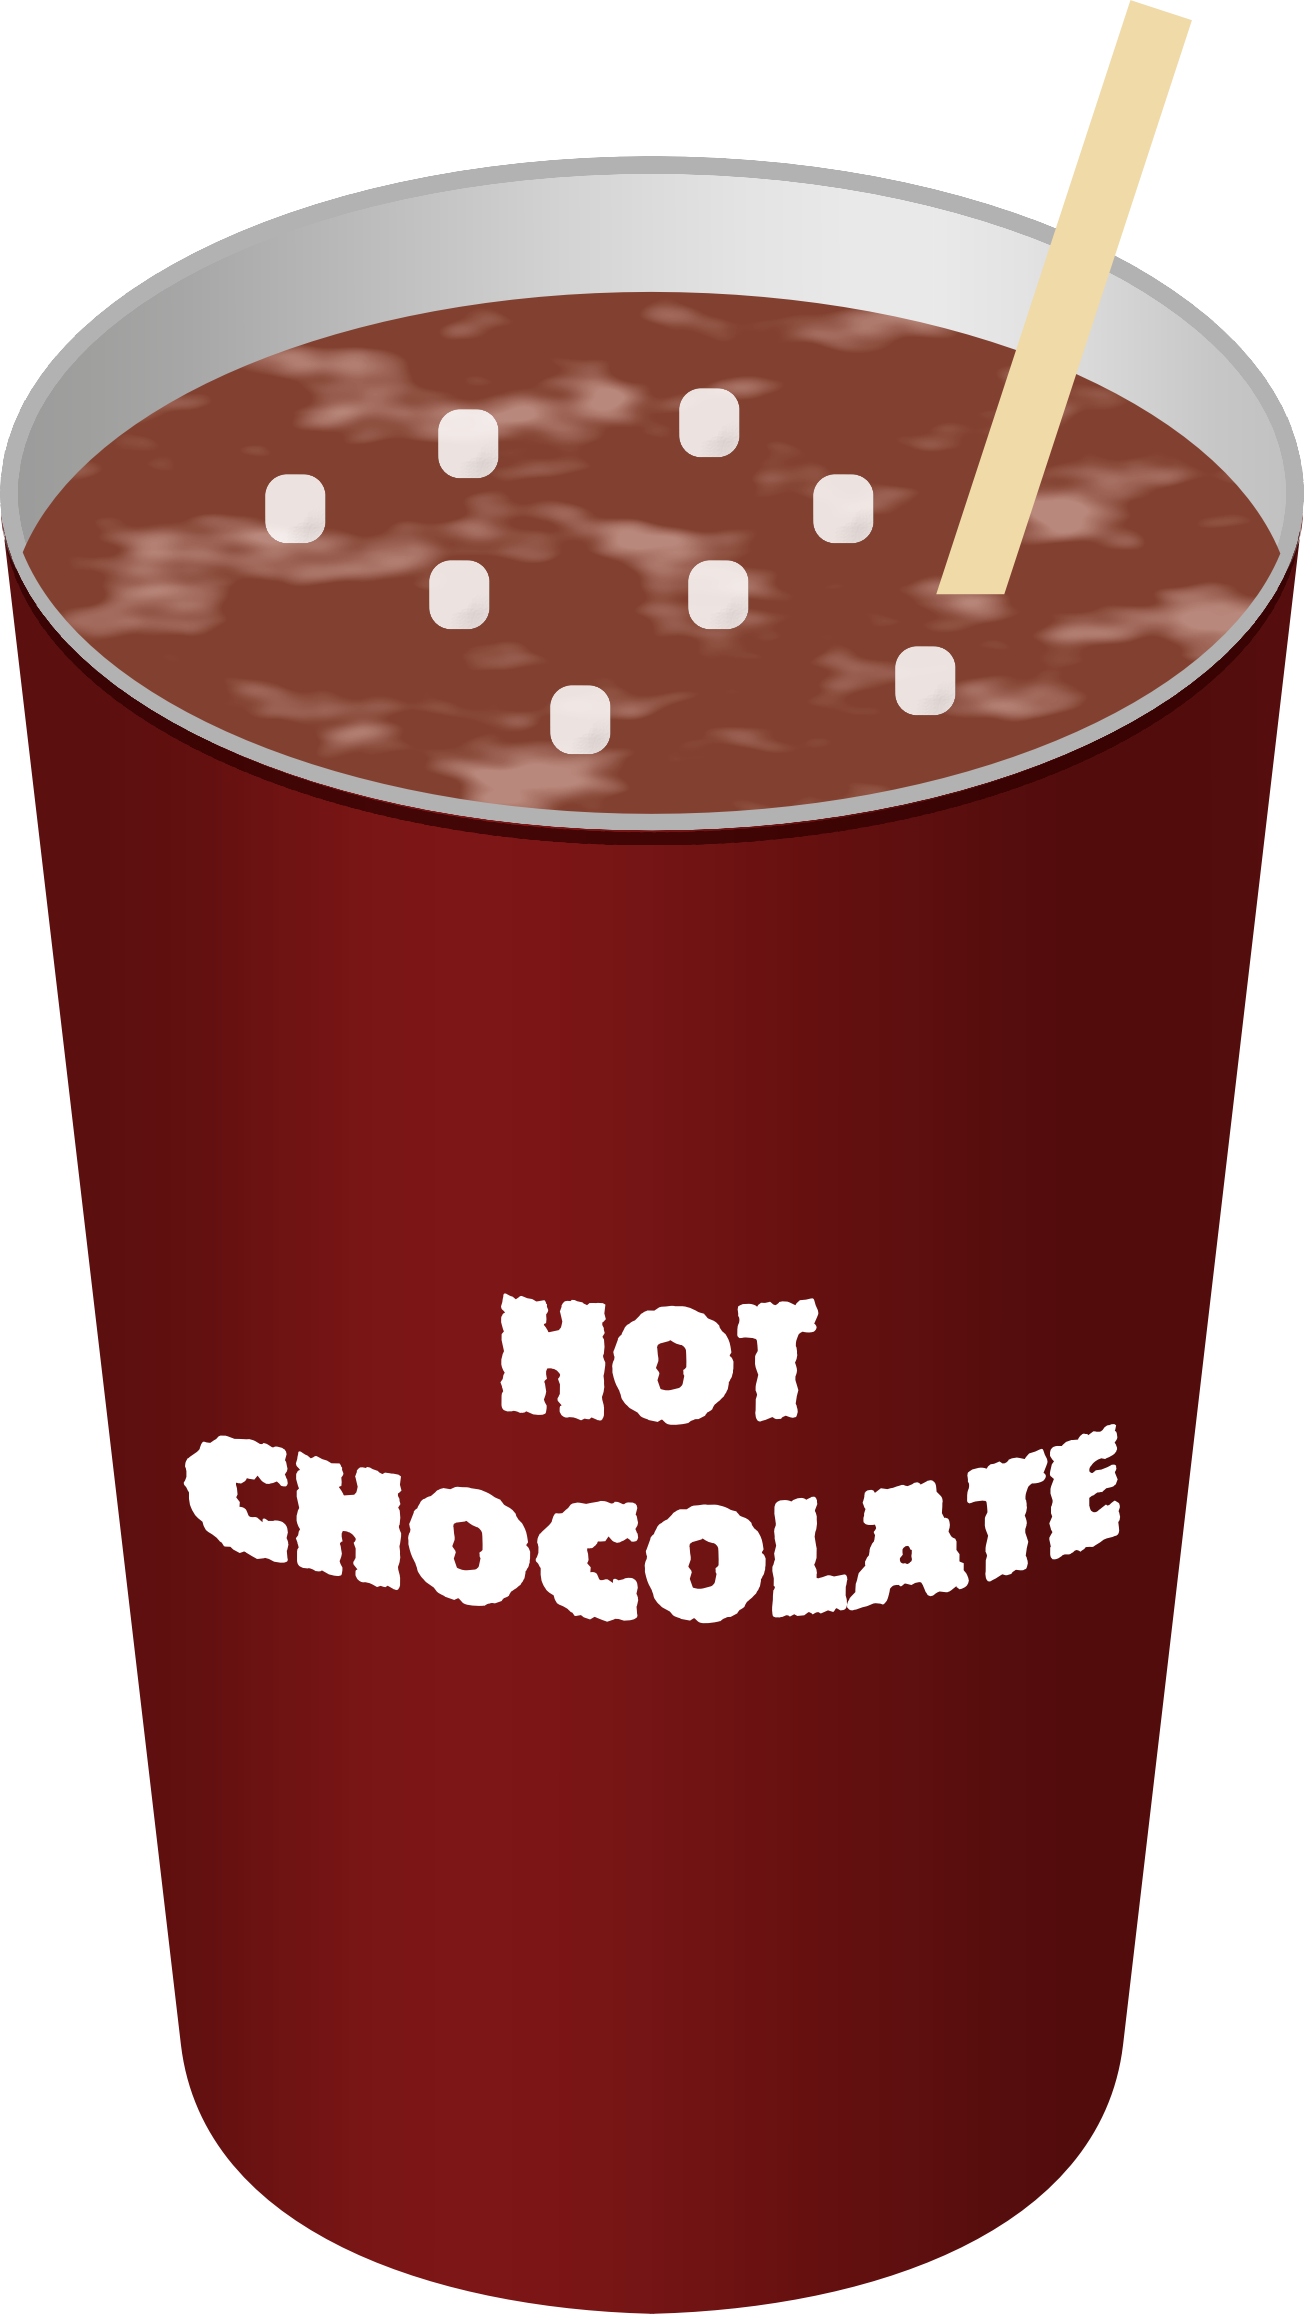 Hot Chocolate clipart transparent